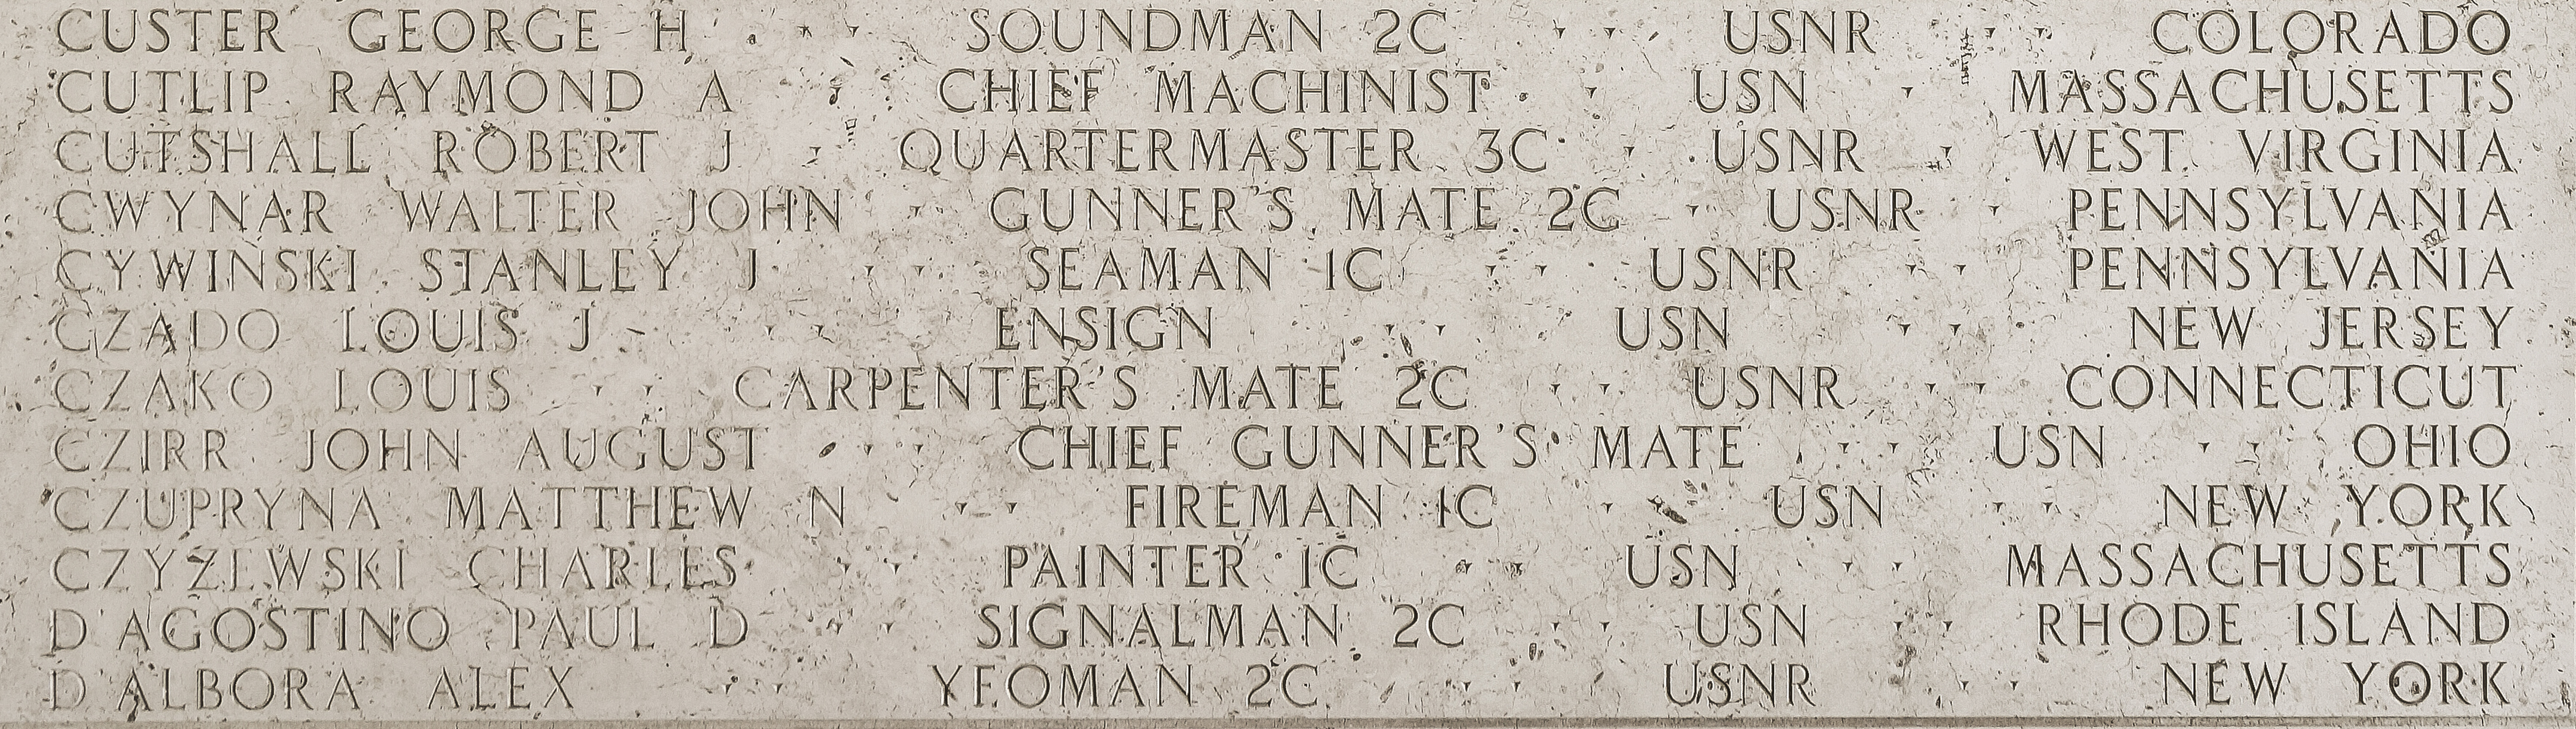 George H. Custer, Soundman Second Class